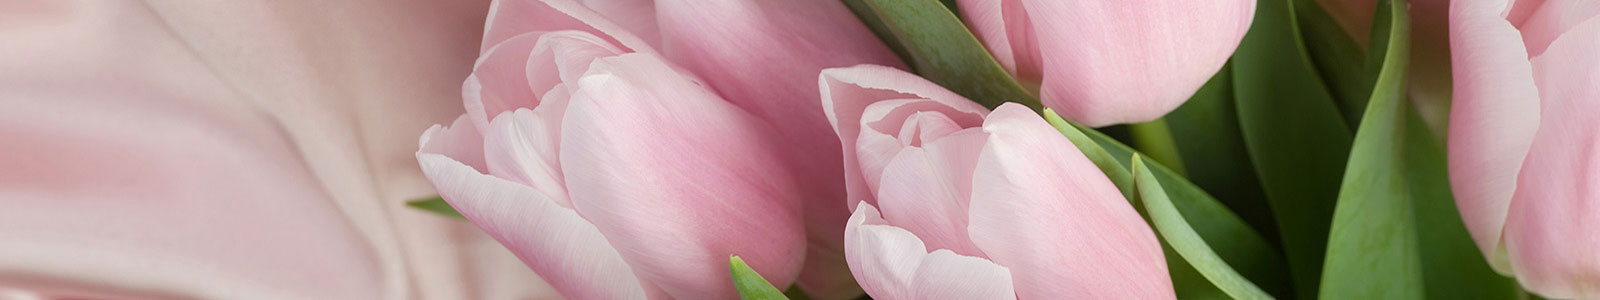 №288 - Бледно розовые тюльпаны